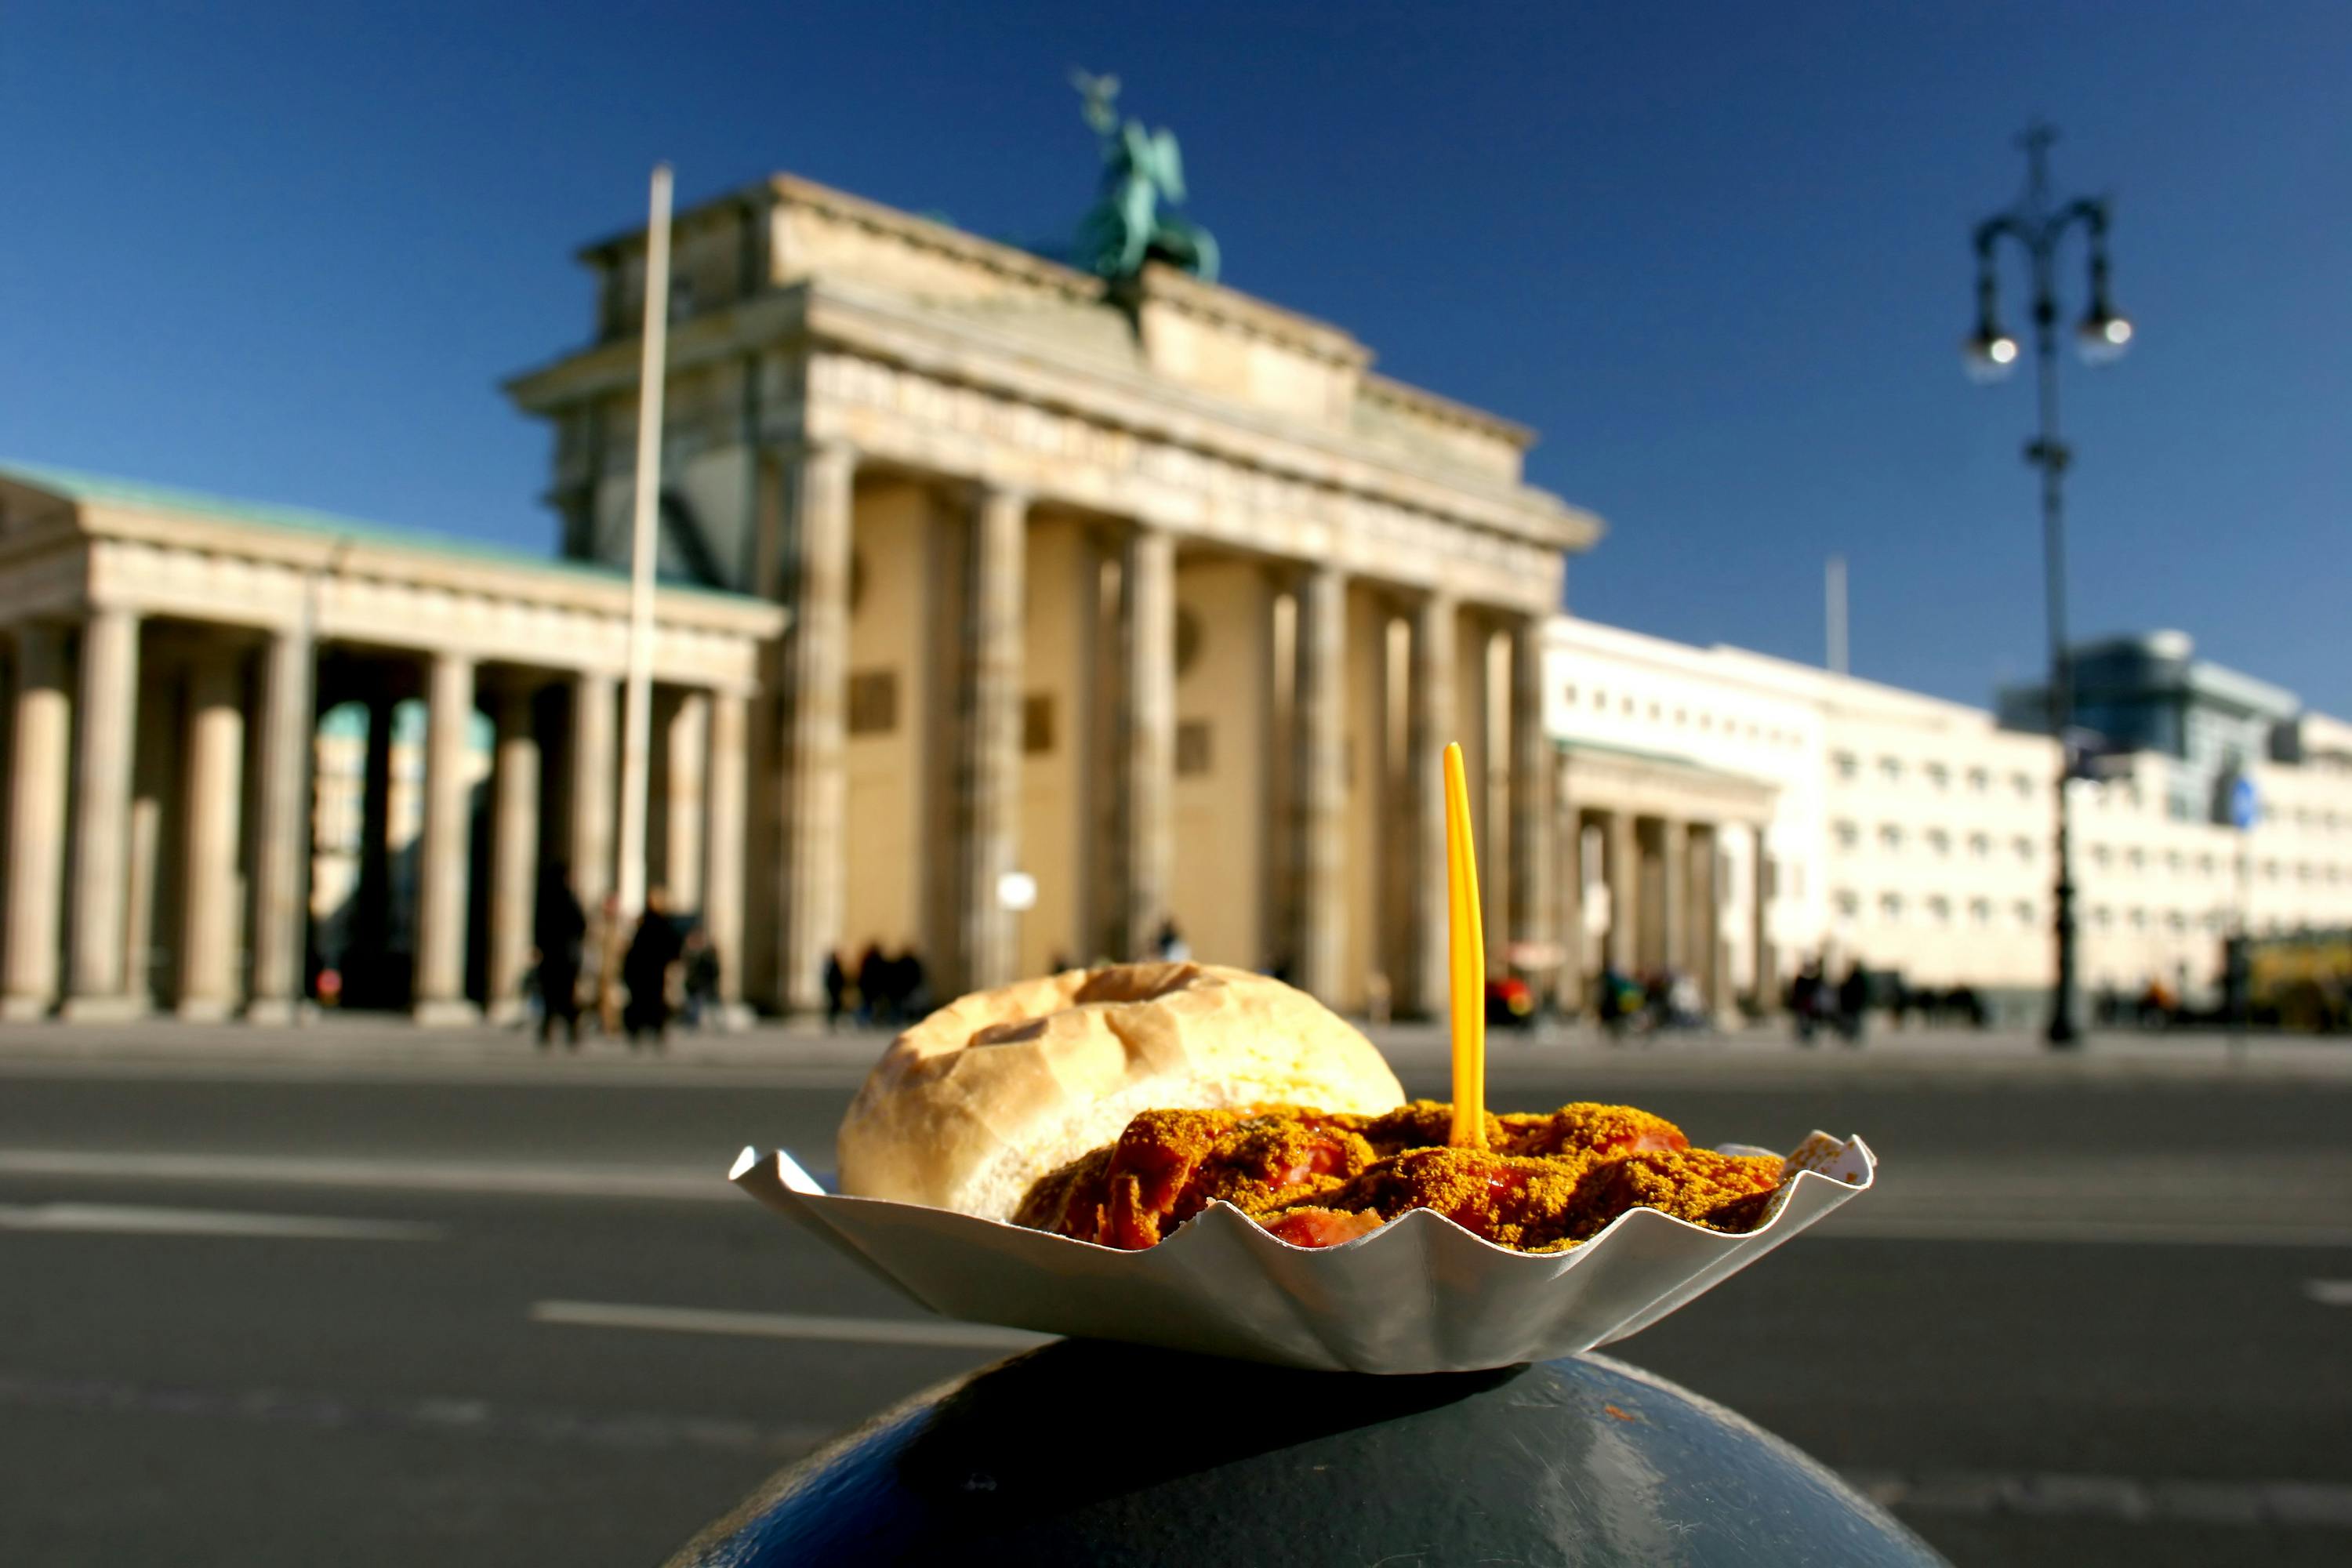 Saksalainen hotdog ja Brandenburgin portti.